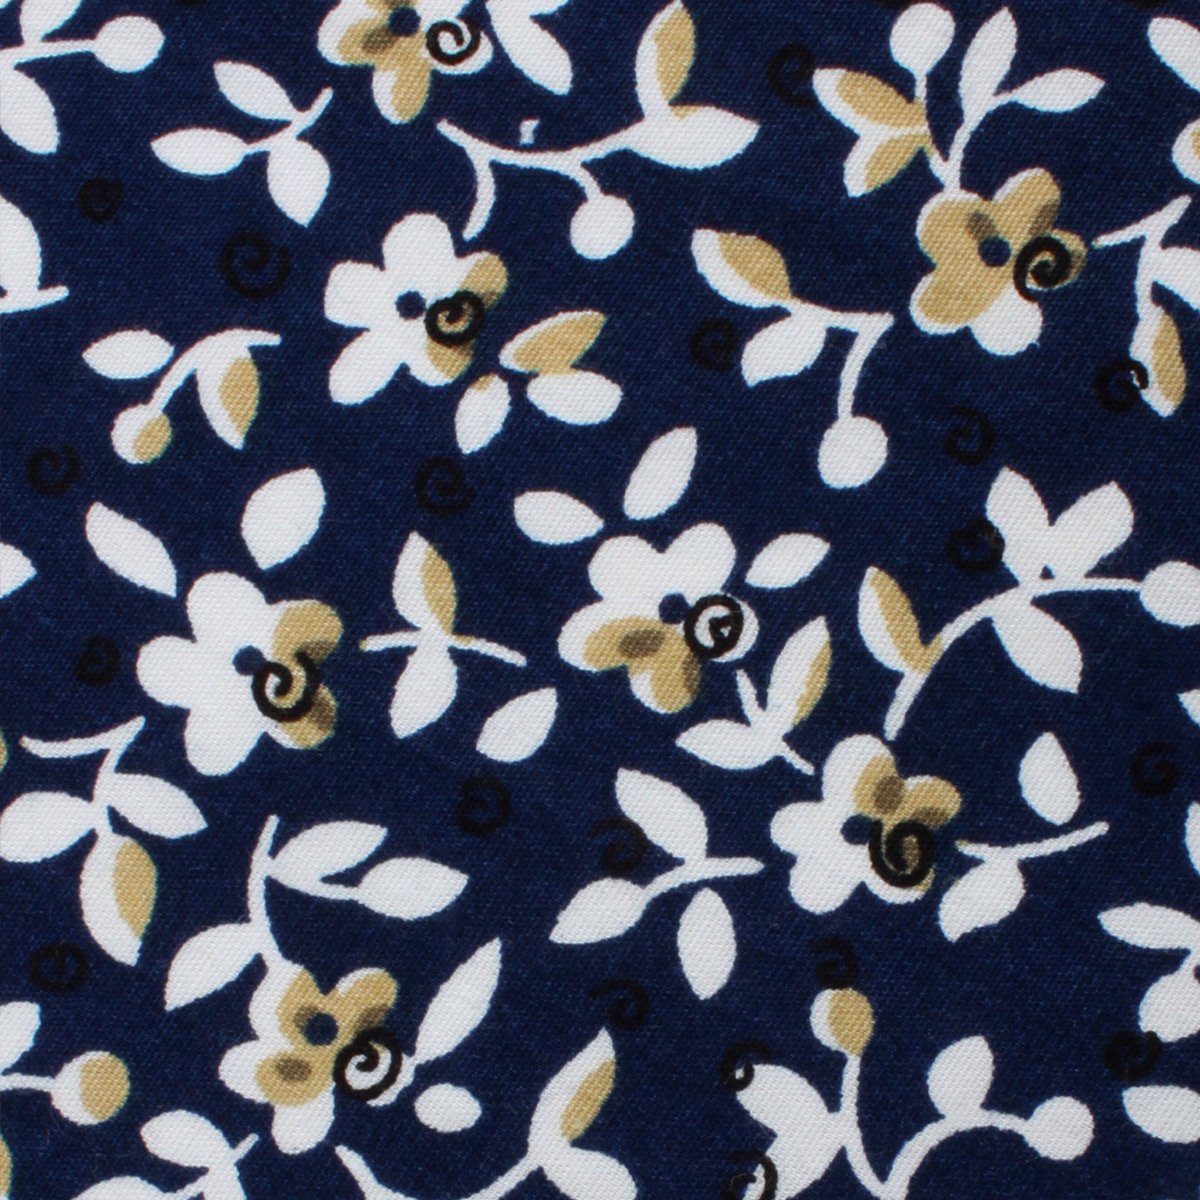 Yukata Navy Blue Floral Skinny Tie Fabric